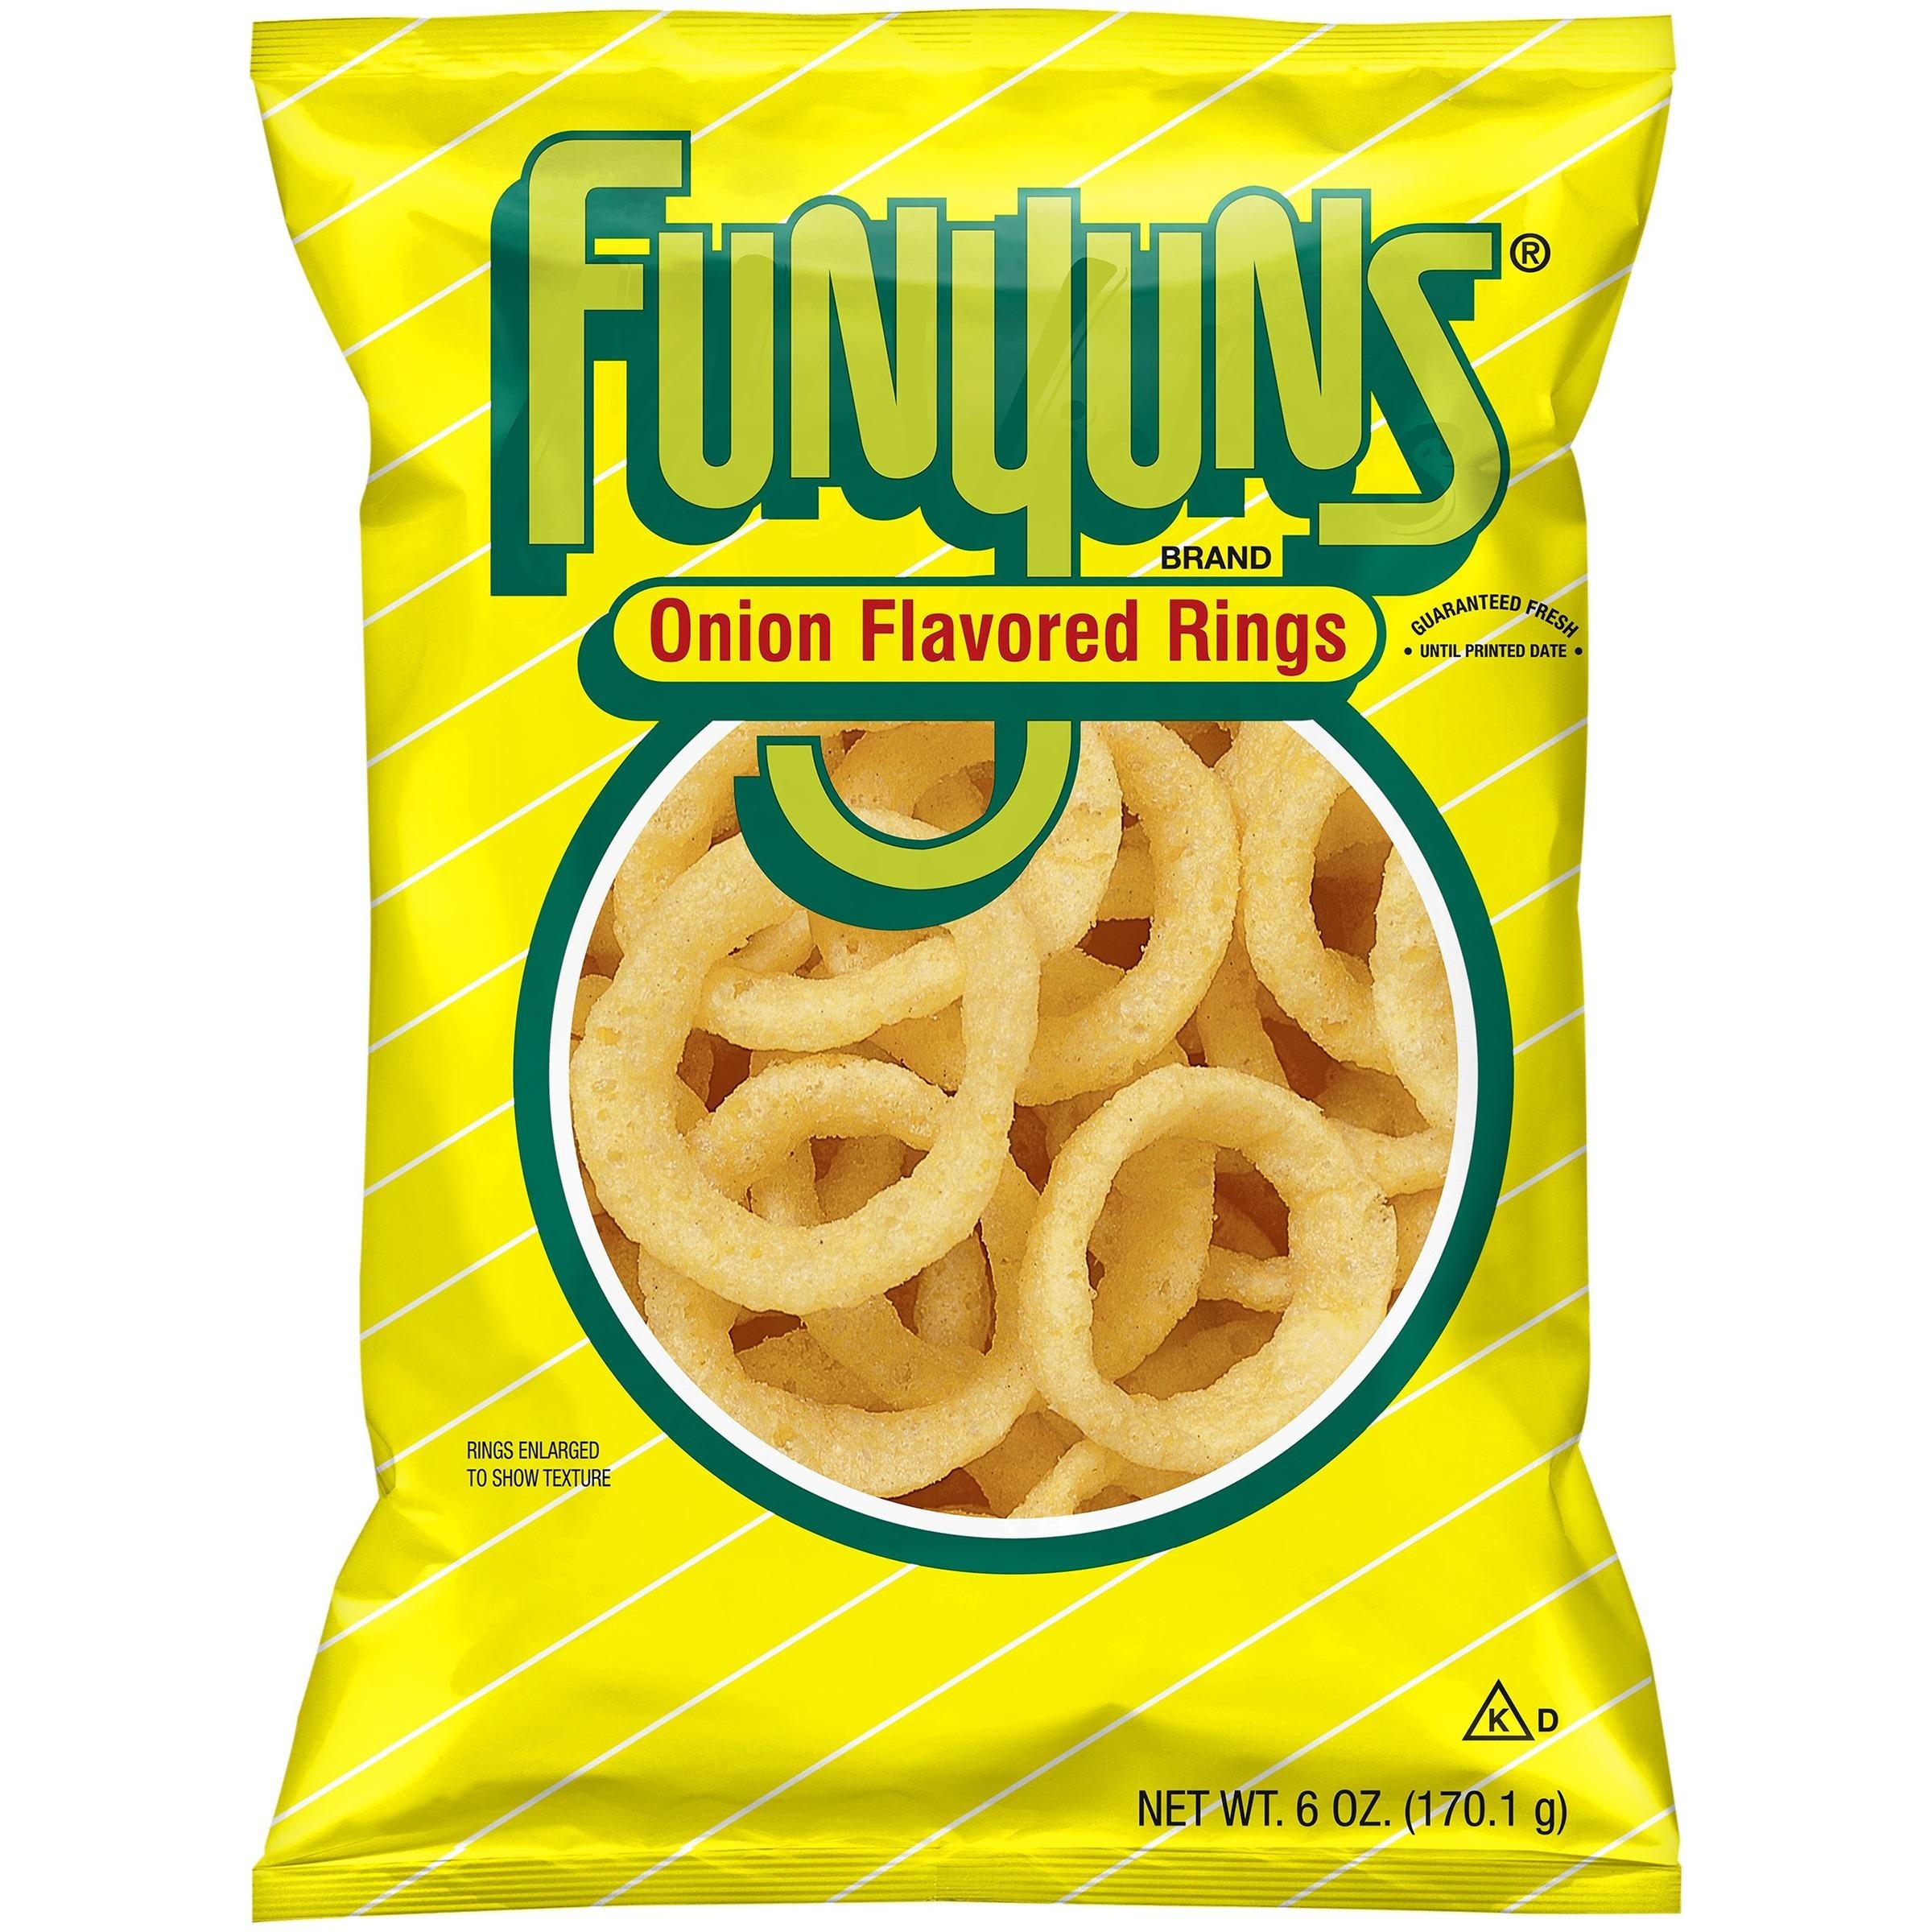 Funyuns Onion Flavored Rings Regular - 6.0 Oz